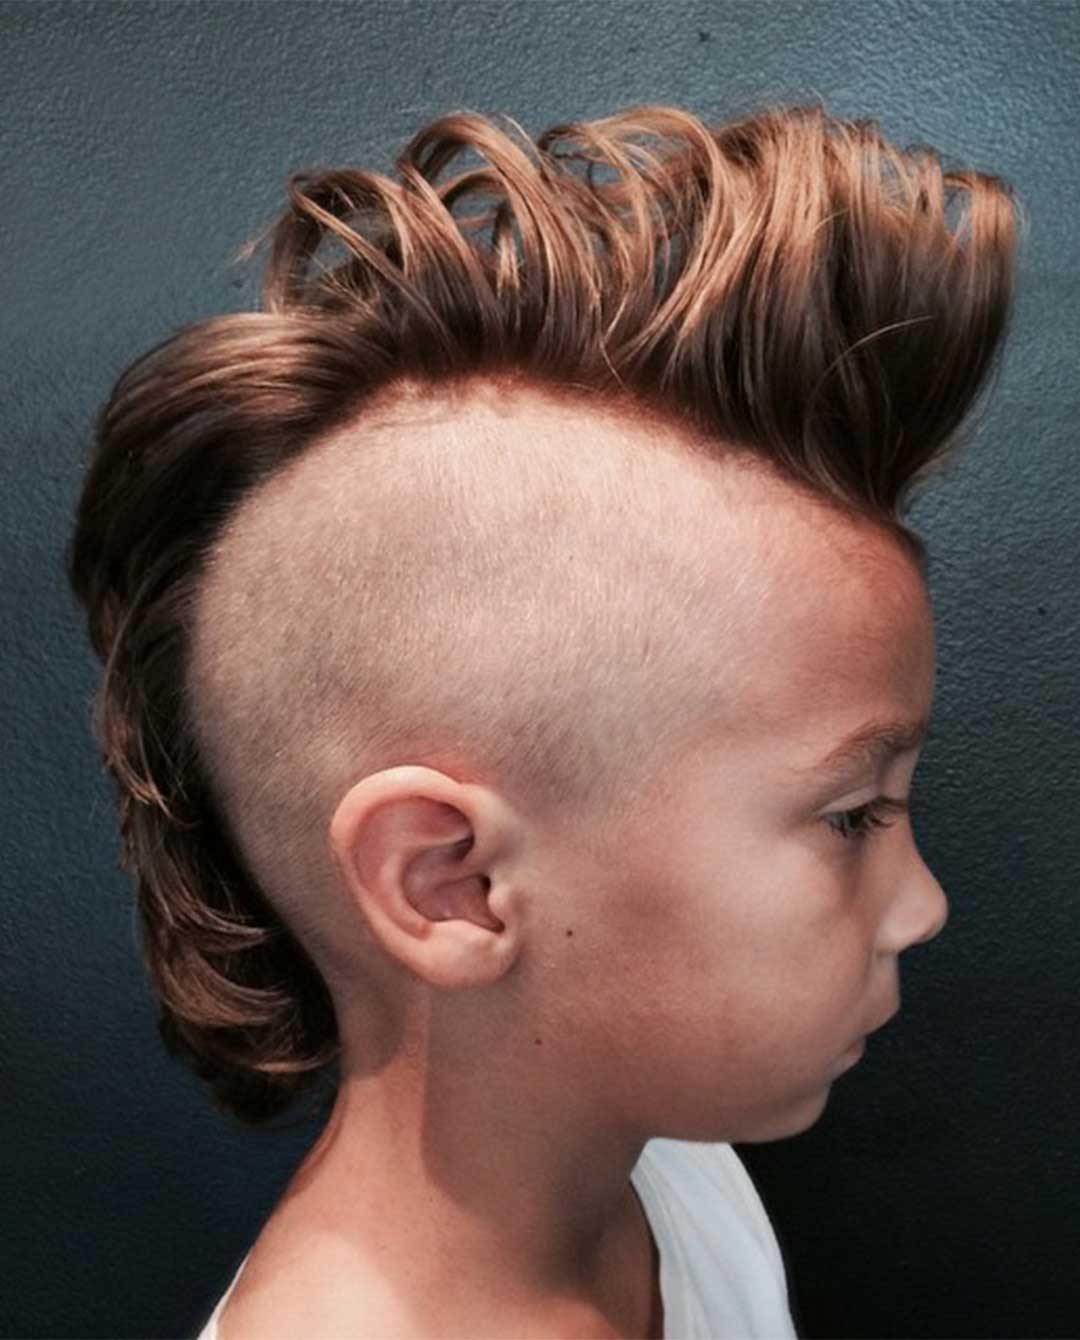 Mohawk Haircut for Boys